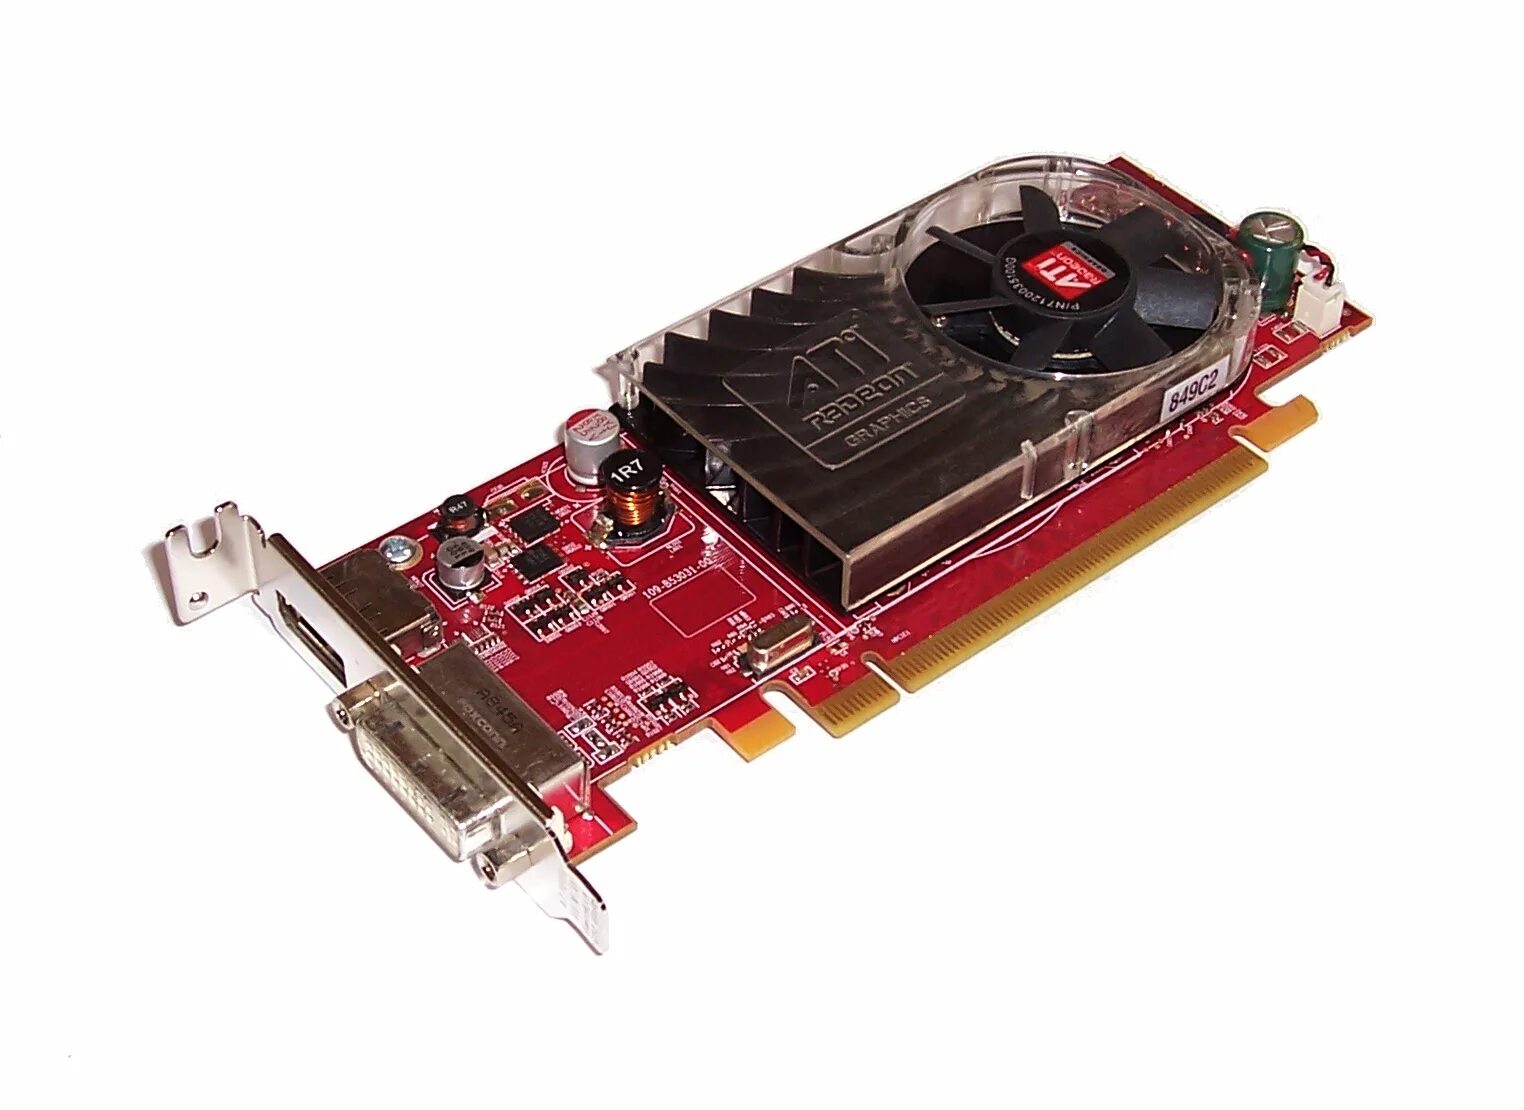 Ati radeon. Видеокарта Radeon ATI HD 3470 Graphics. ATI Radeon HD 3470 256 МБ. Видеокарта AMD Mobility Radeon HD 3470. AMD Radeon 5040hd.